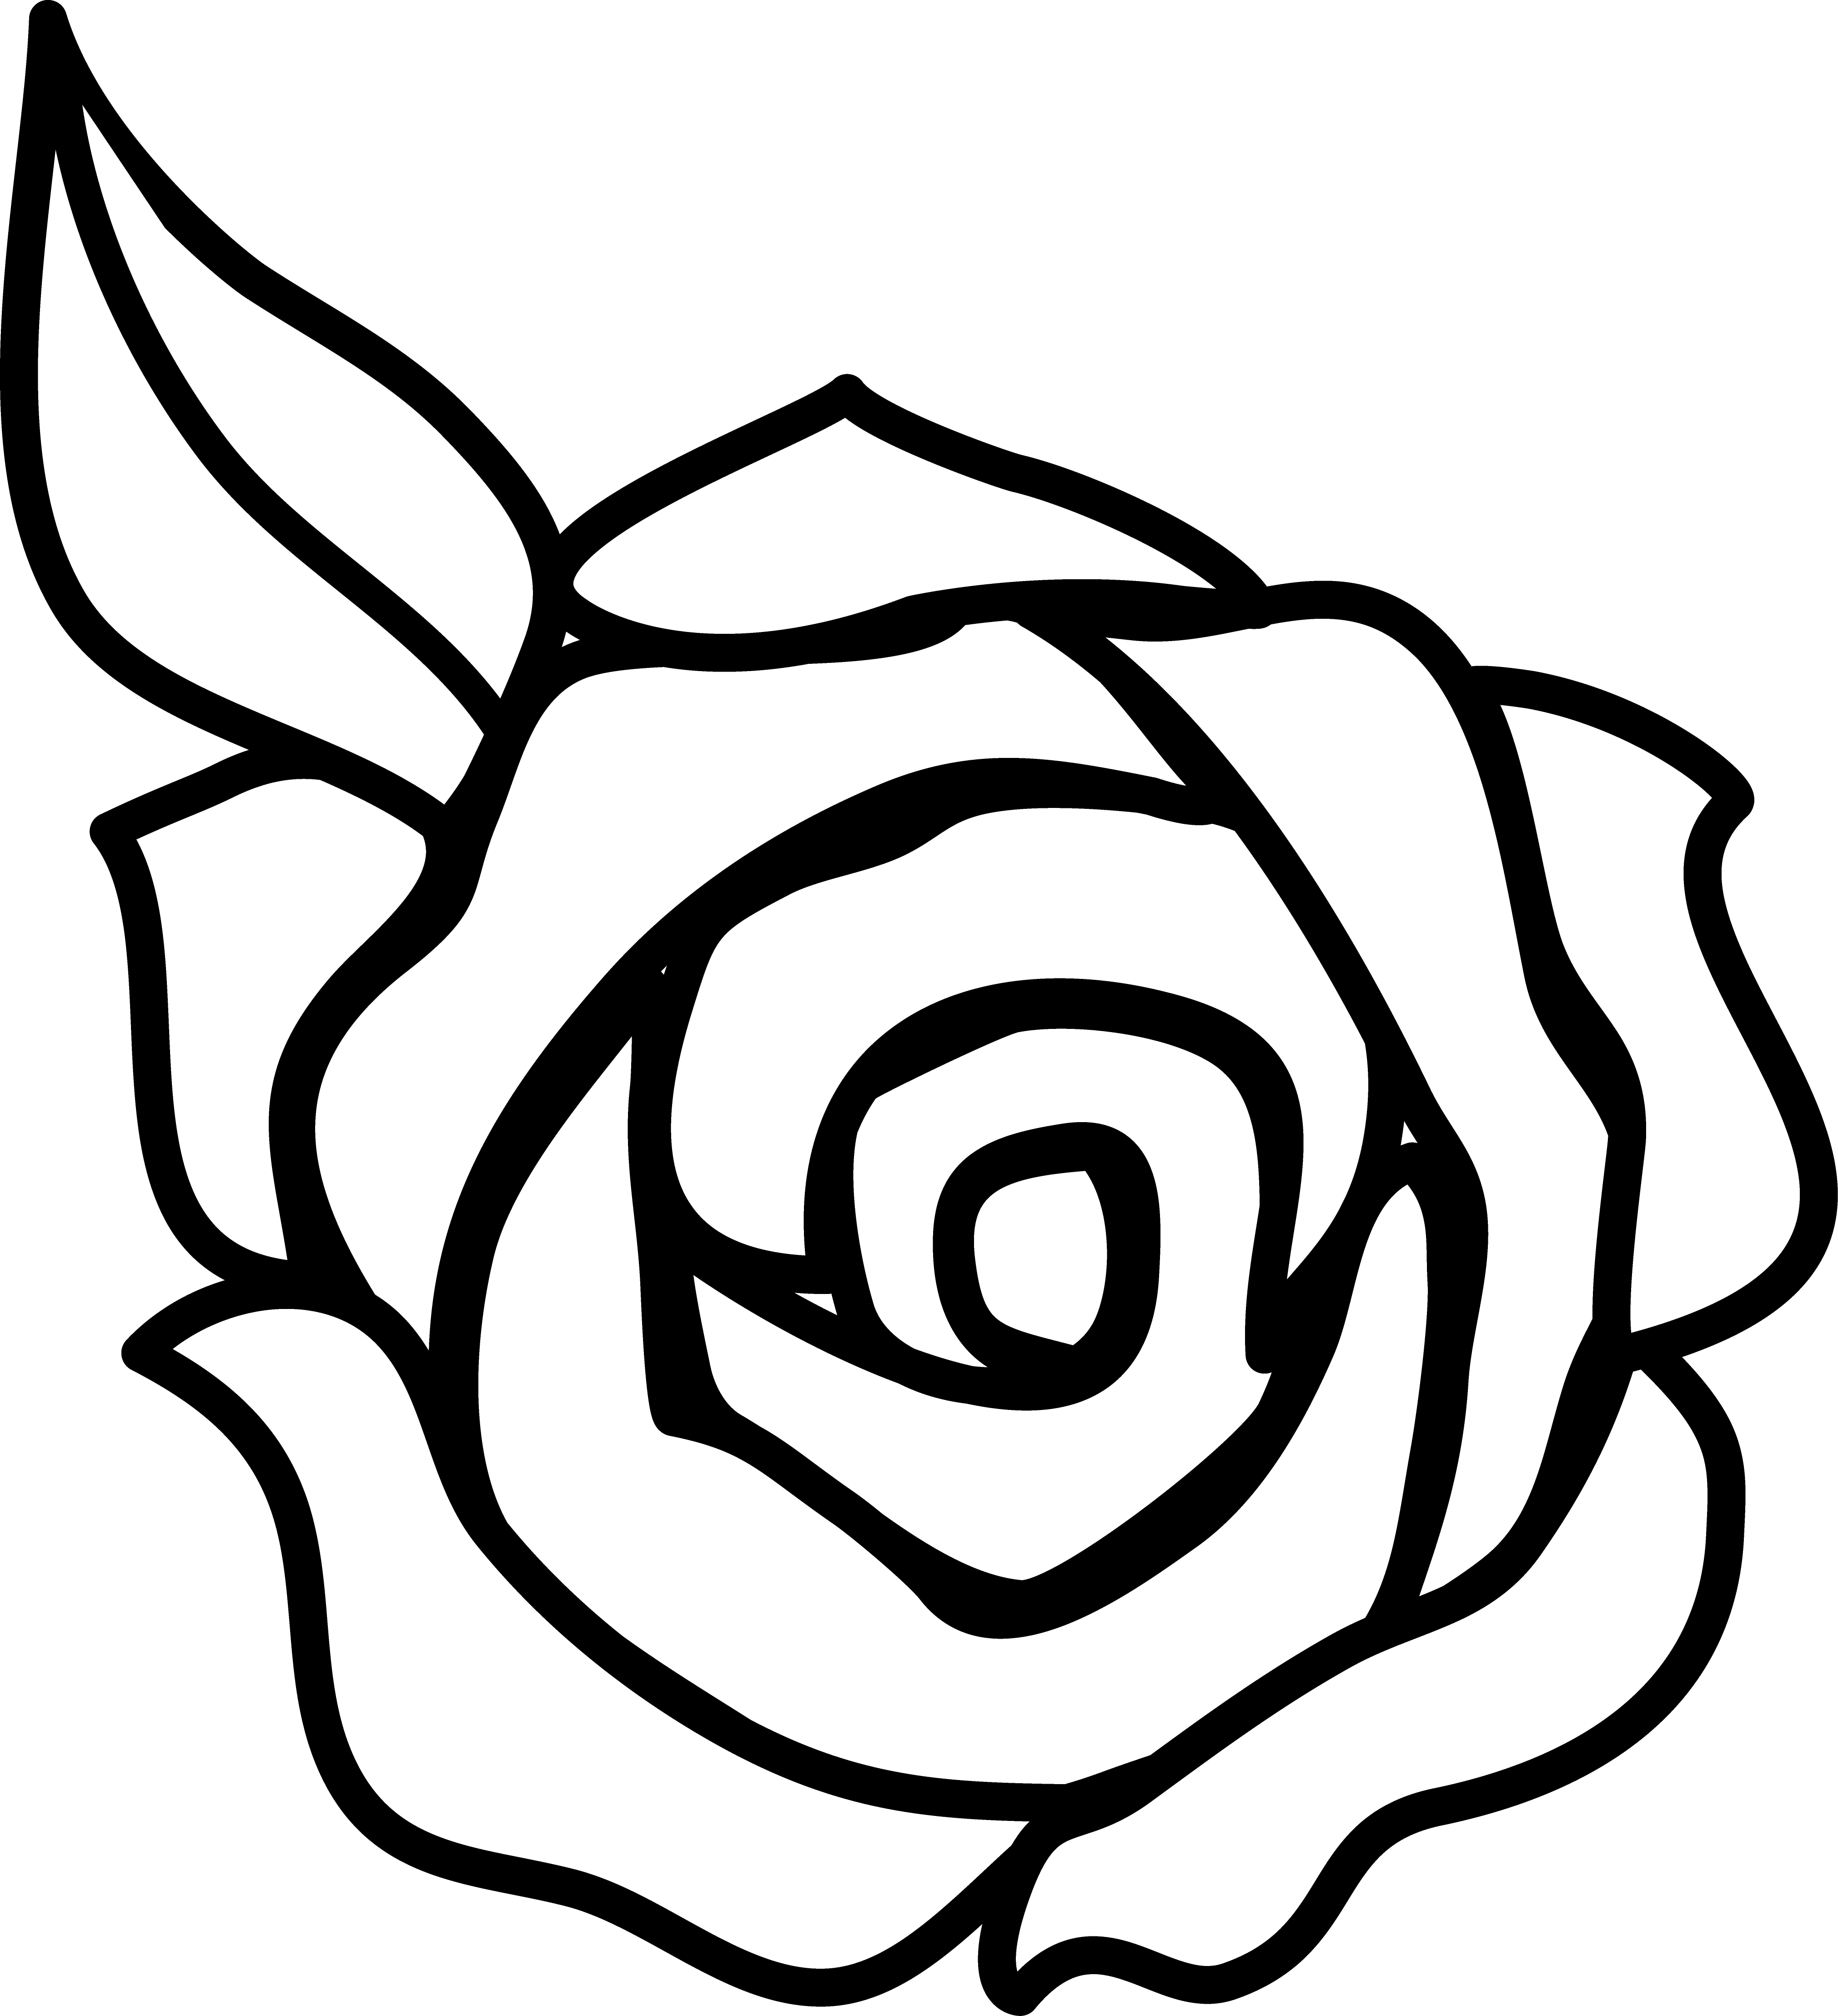 Rose Black and White